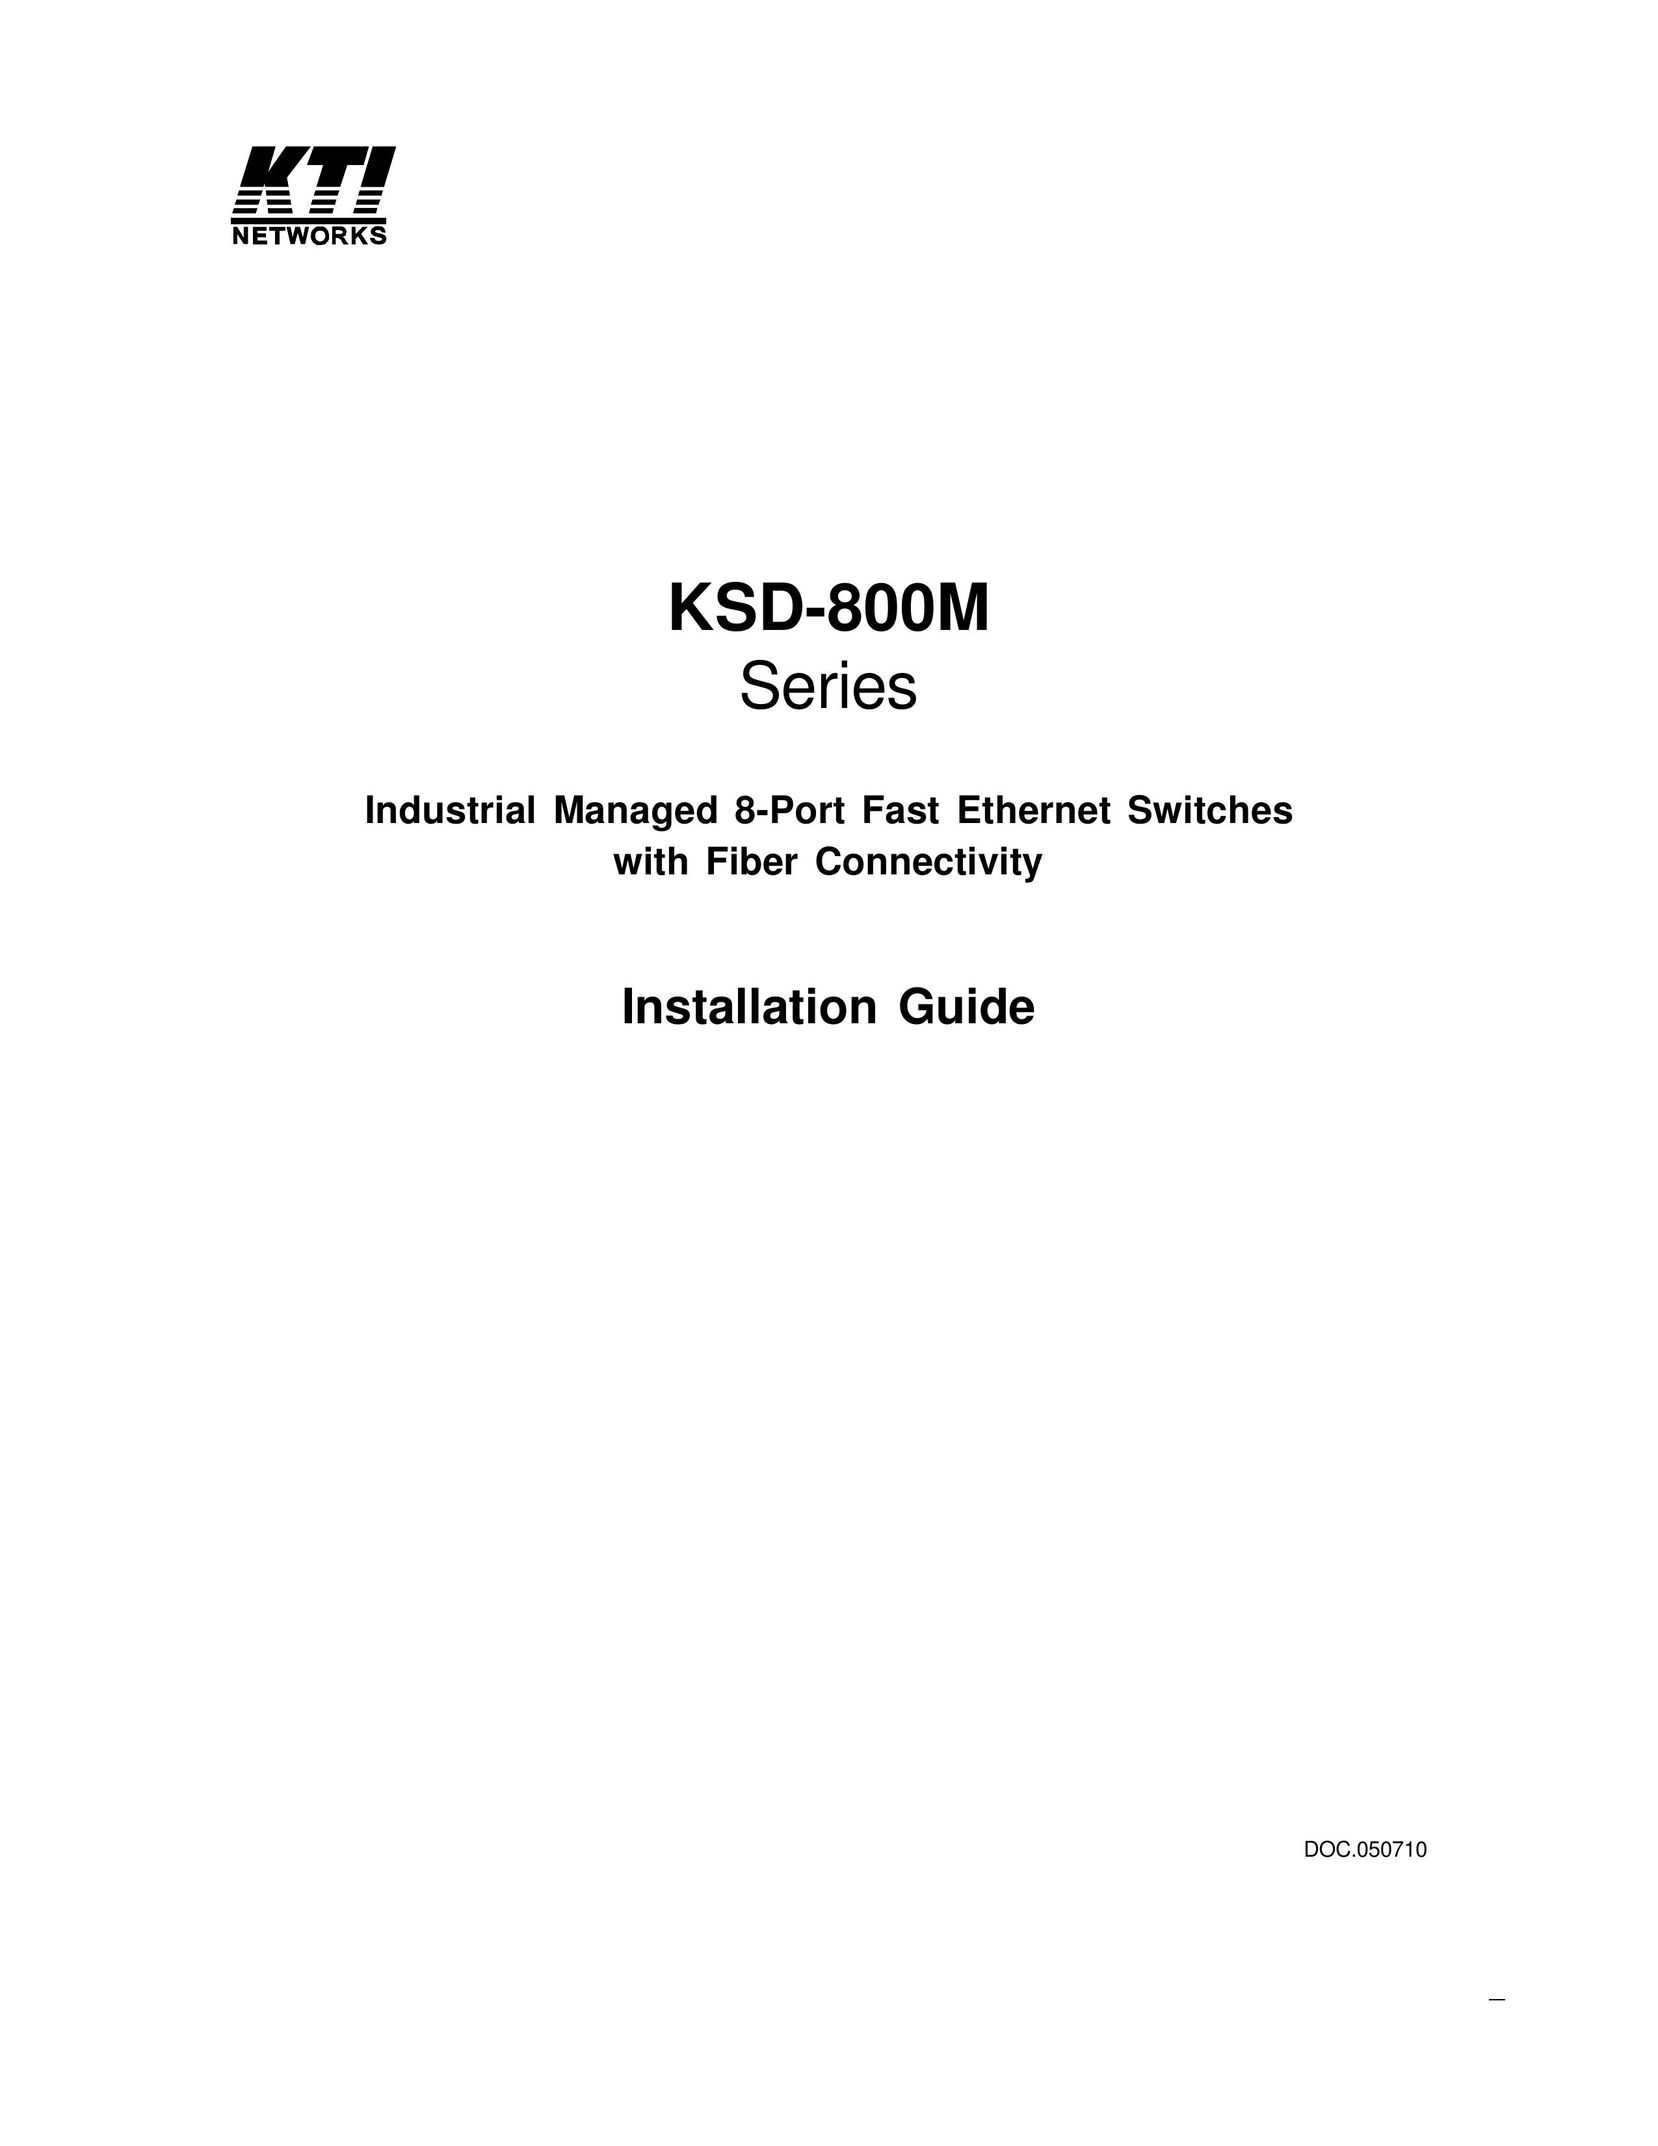 KTI Networks KSD-800M Switch User Manual